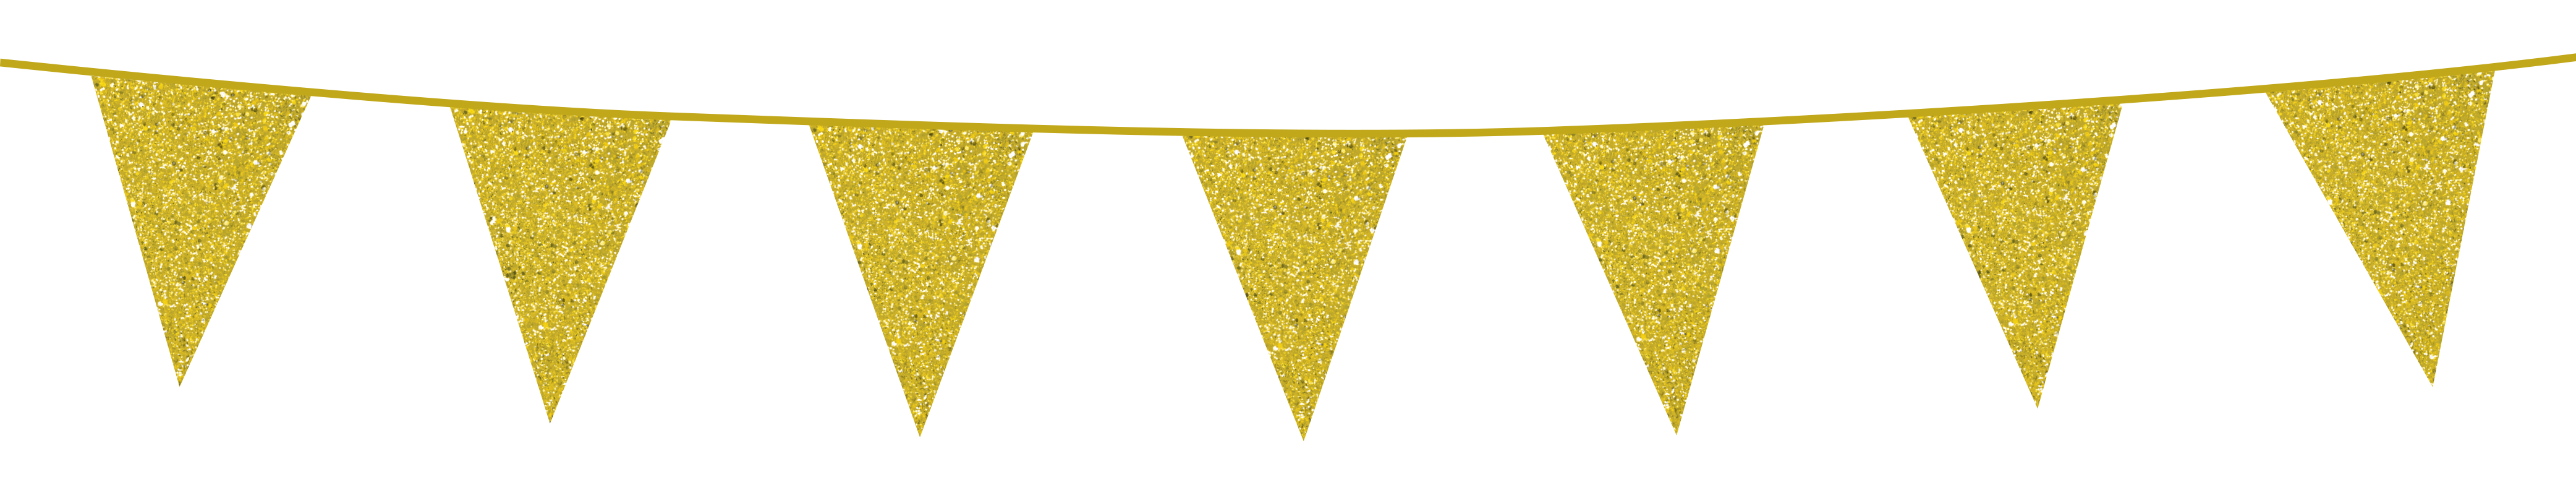 Bunting Glitter 6m. gold - size flags 20x30cm per 6